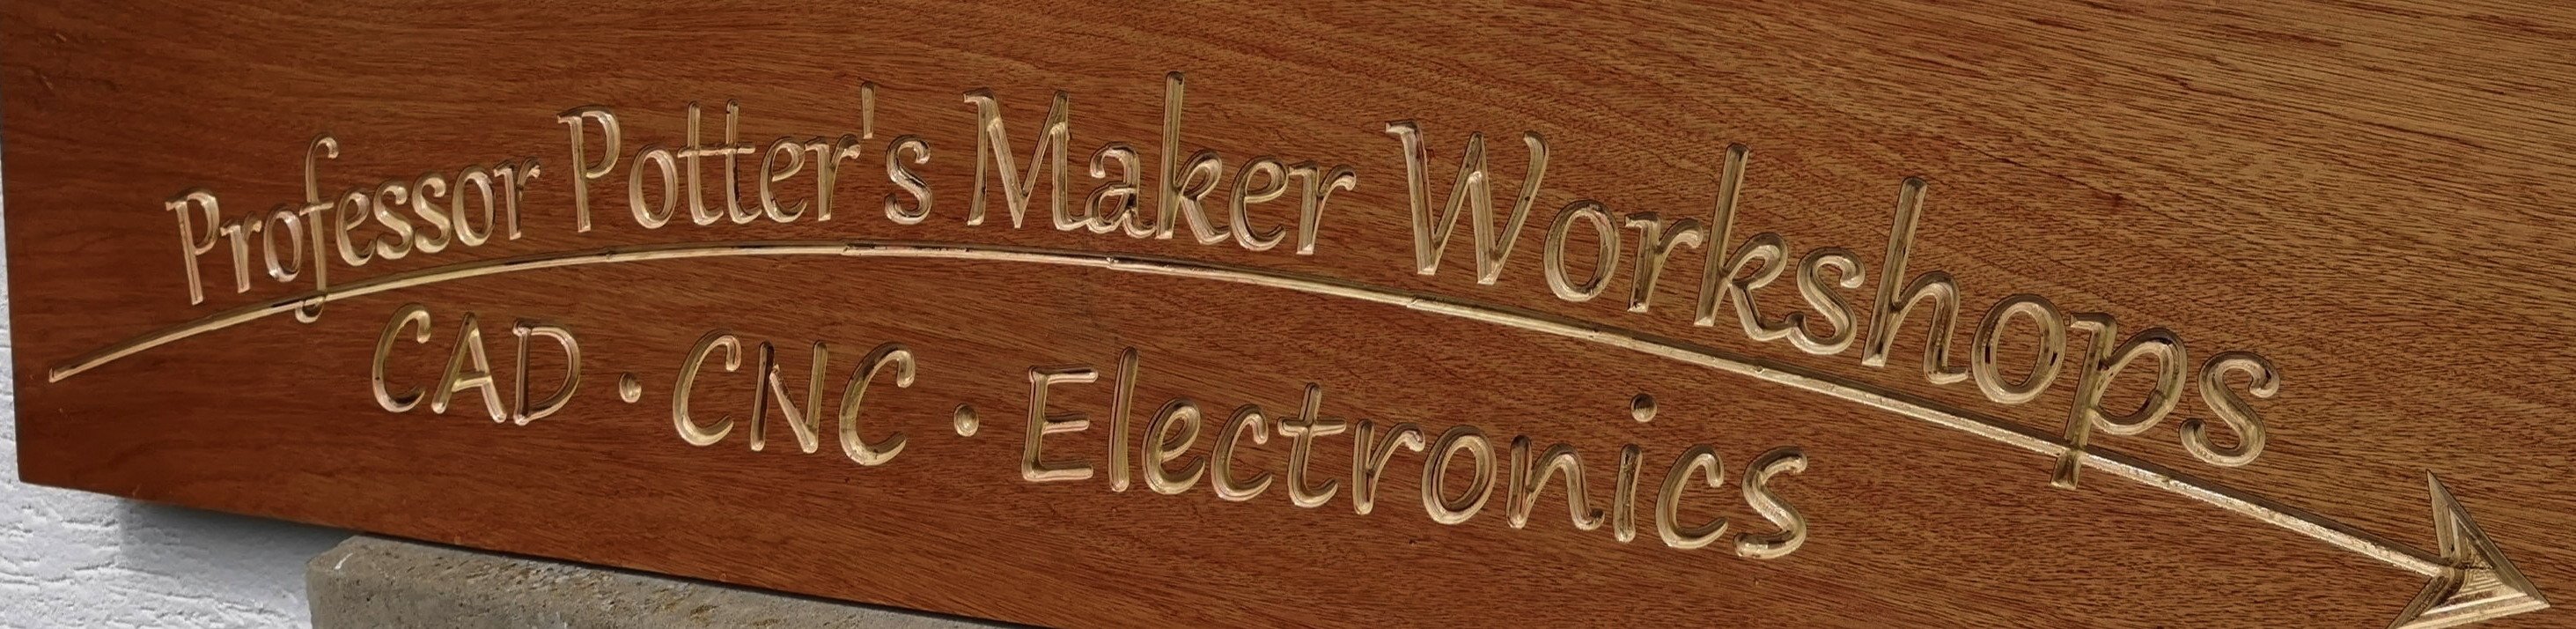 CNC Woodworking and Electronics Workshops - SteveMpotter.tech